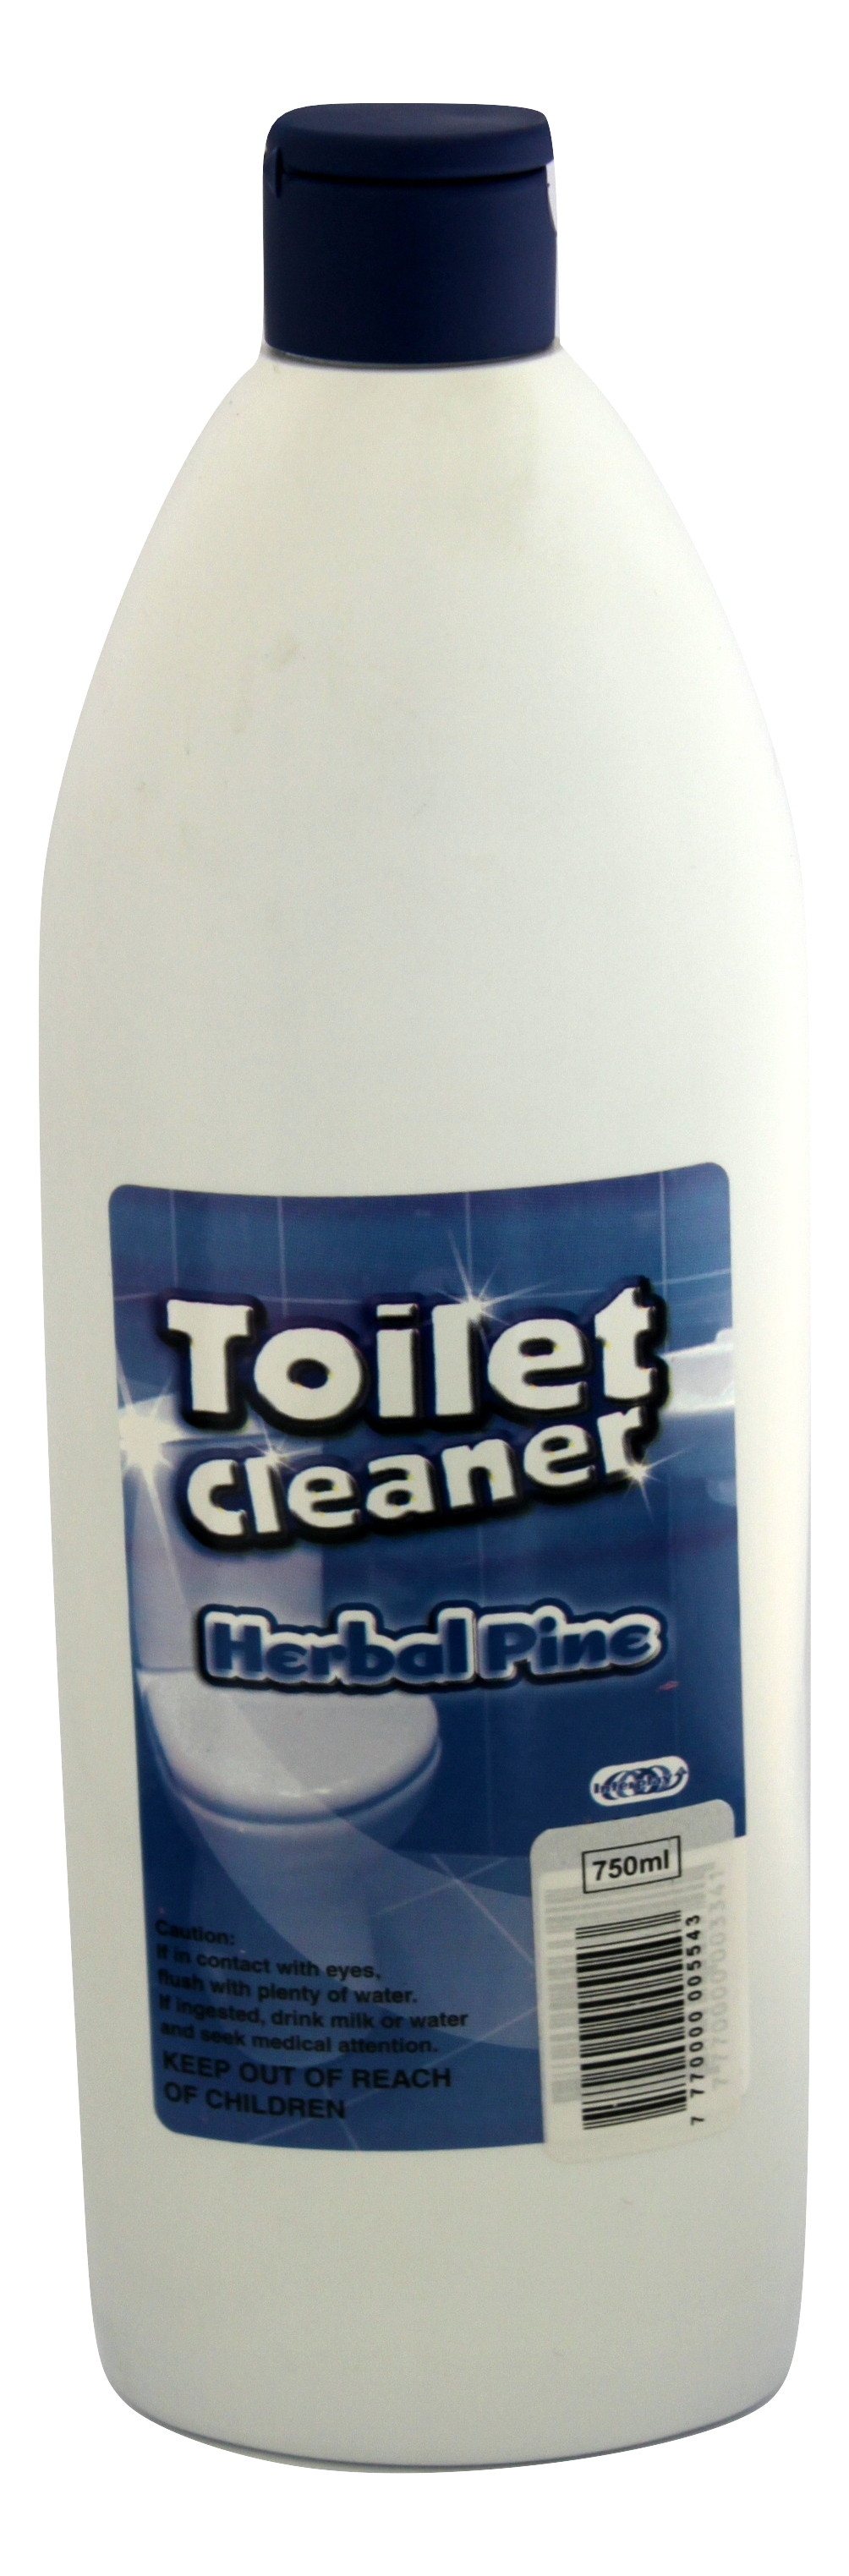 toilet-cleaner-